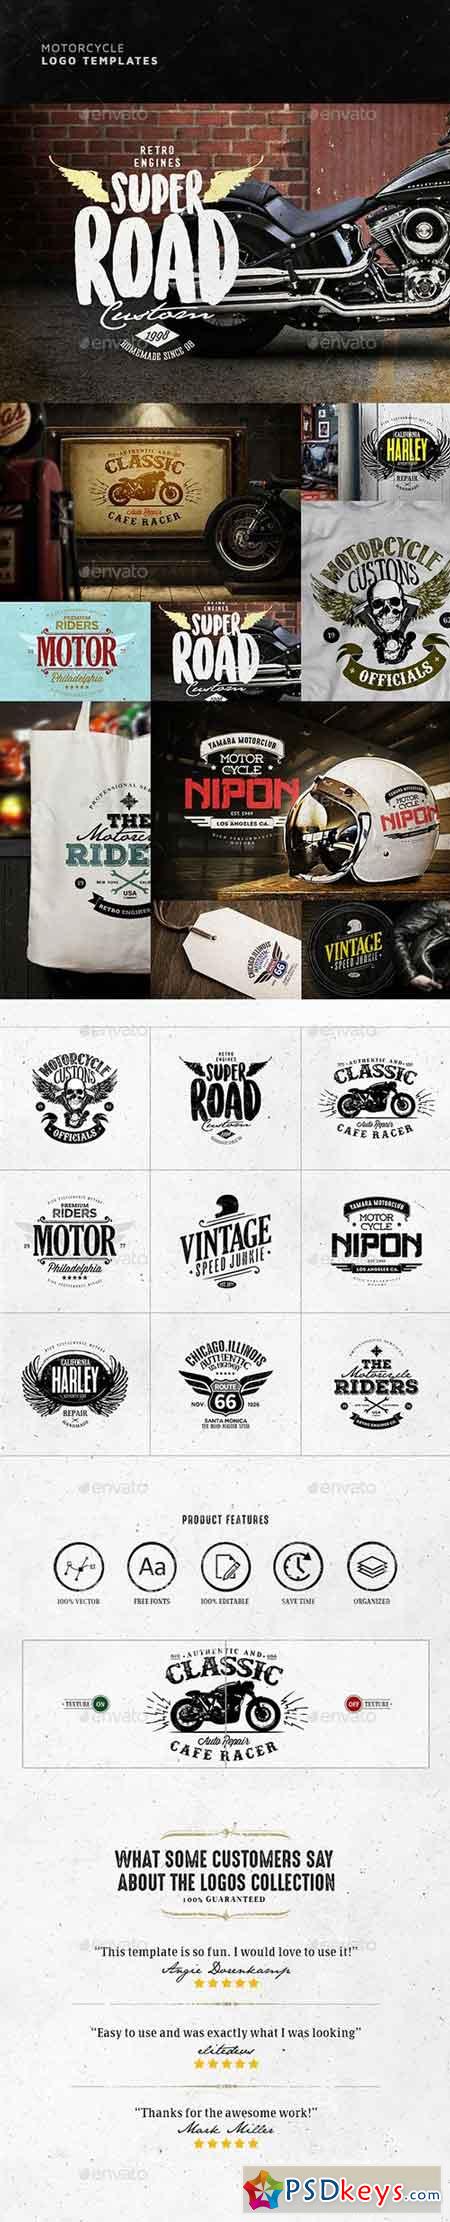 Vintage Motorcycle Logo Design 20153446